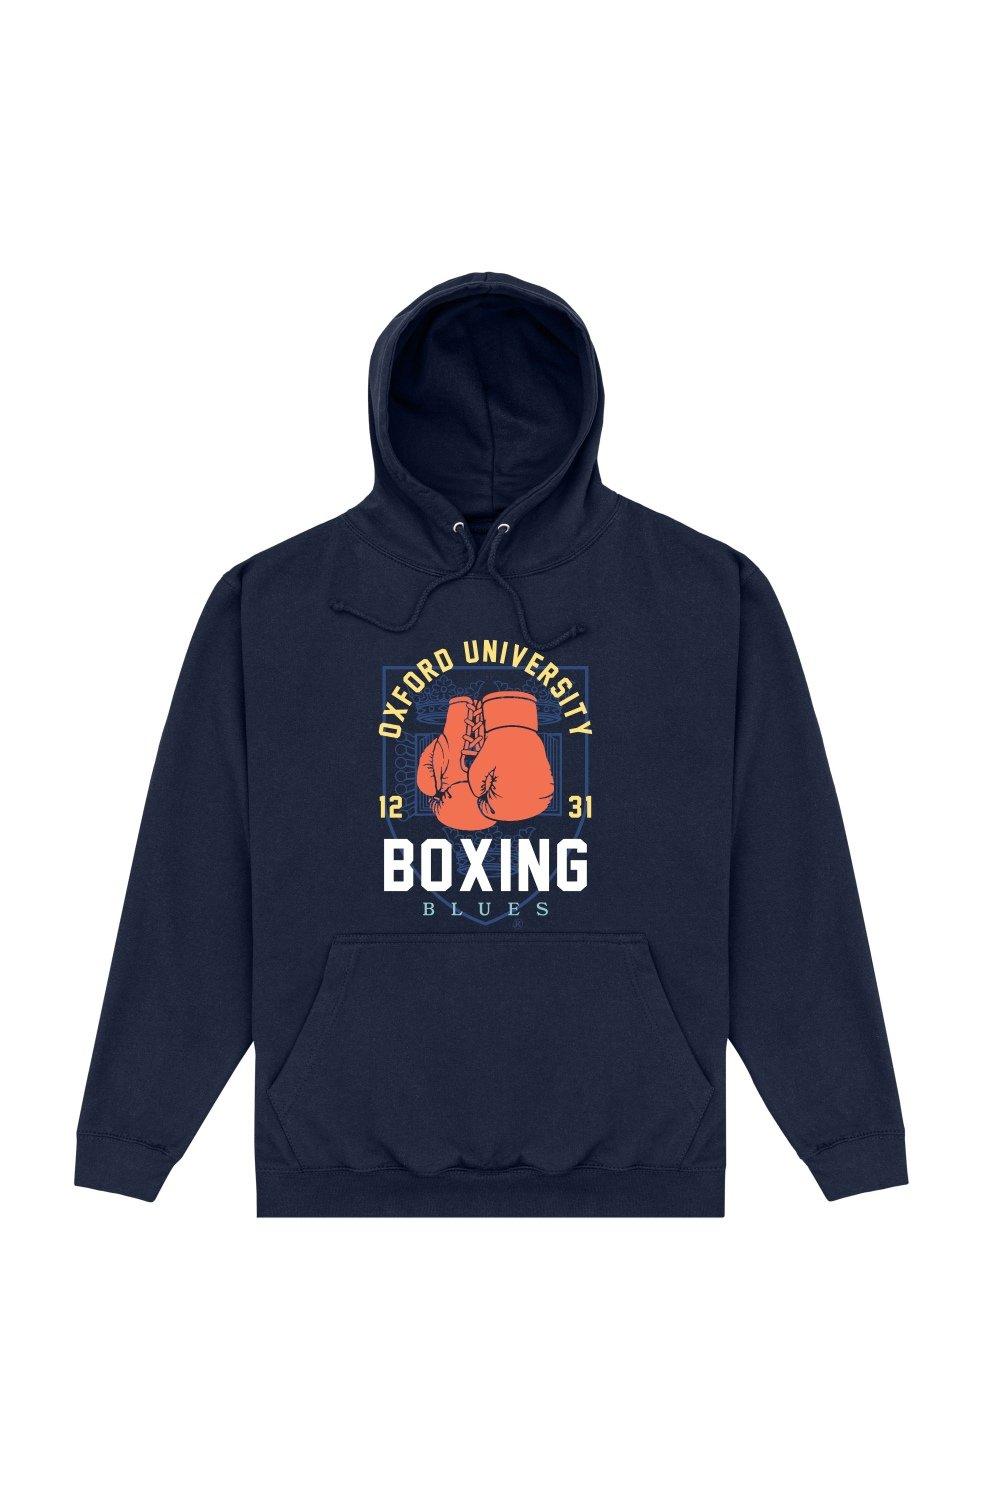 Boxing Hoodie Navy Long Sleeve OTH